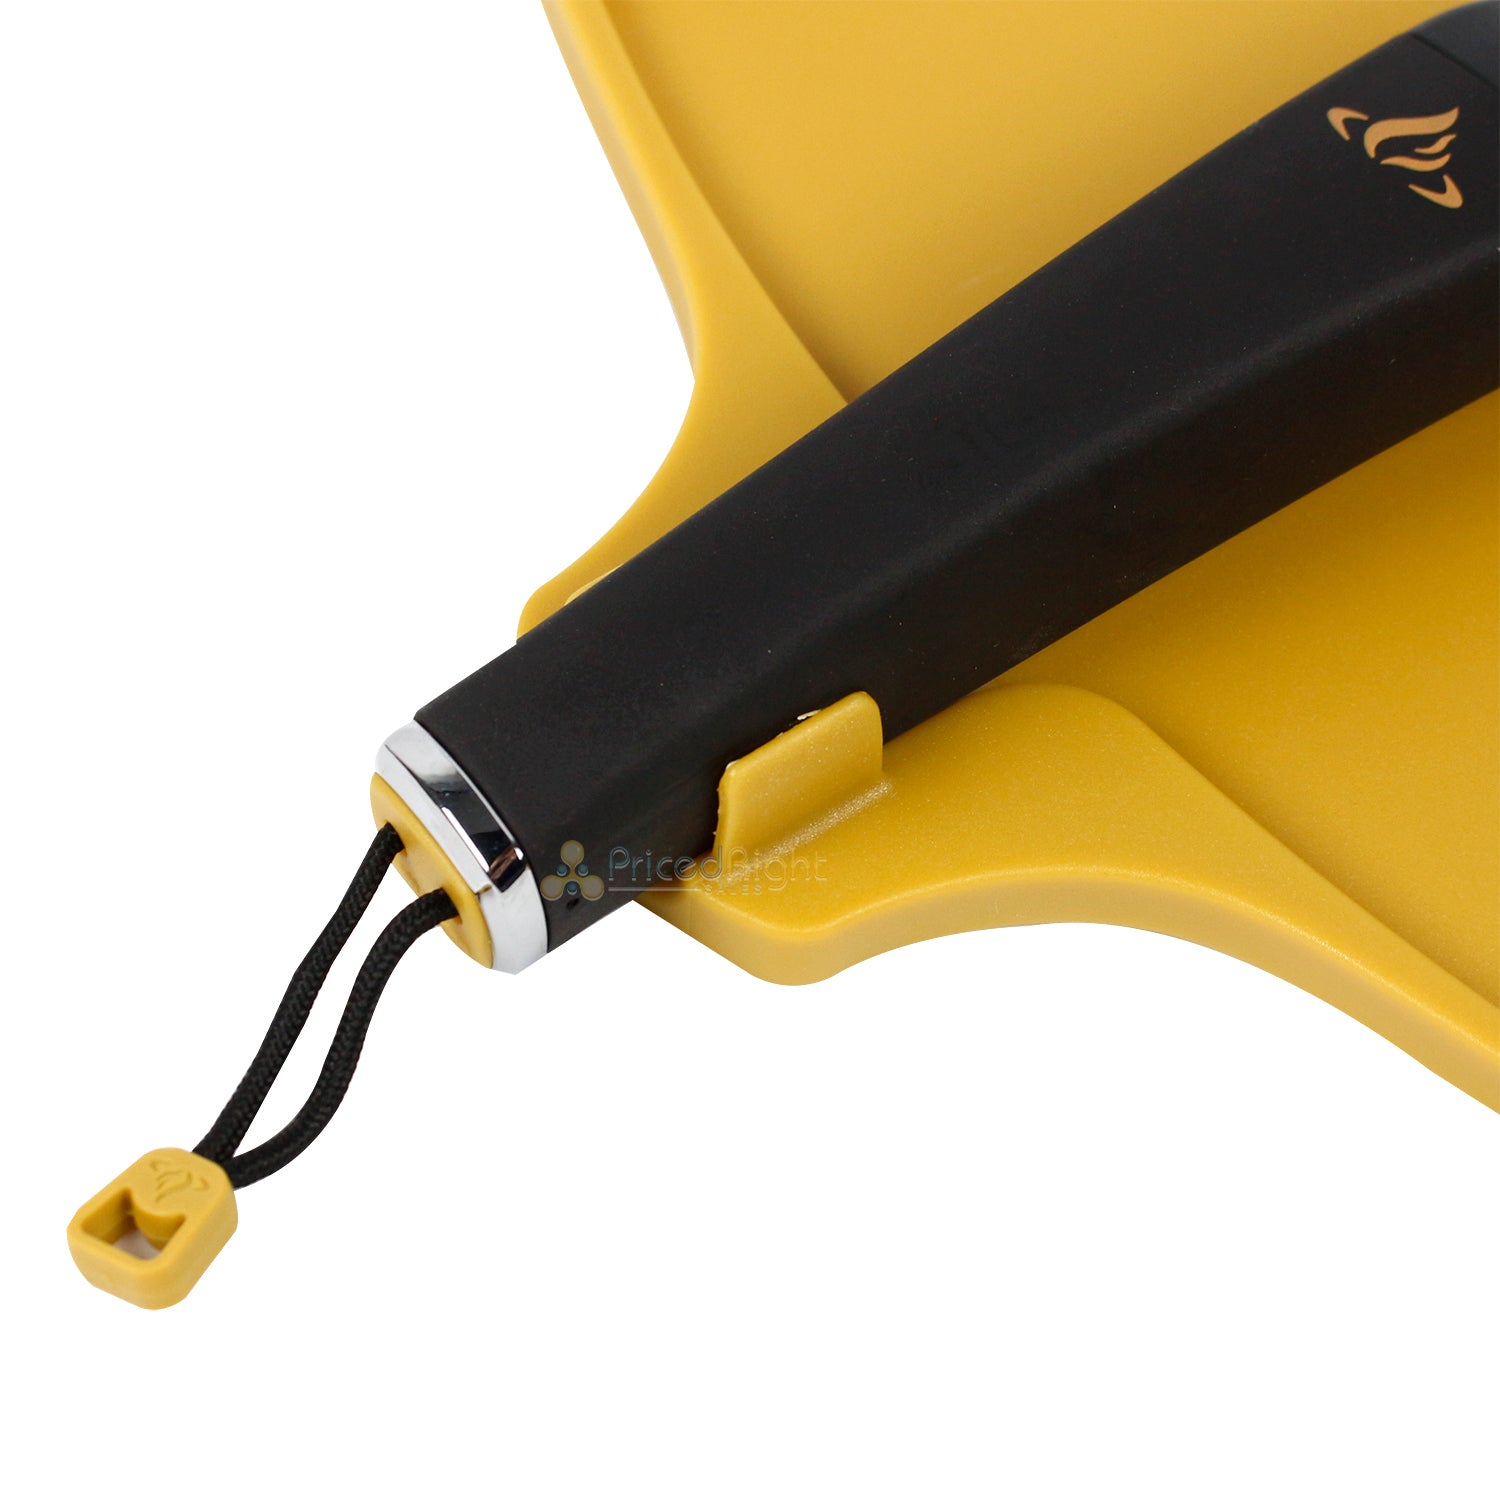 Halo Versa 16 Scraper Brush Kit W/ Dust Pan Removable Tip Nylon Bristle HZ-3023